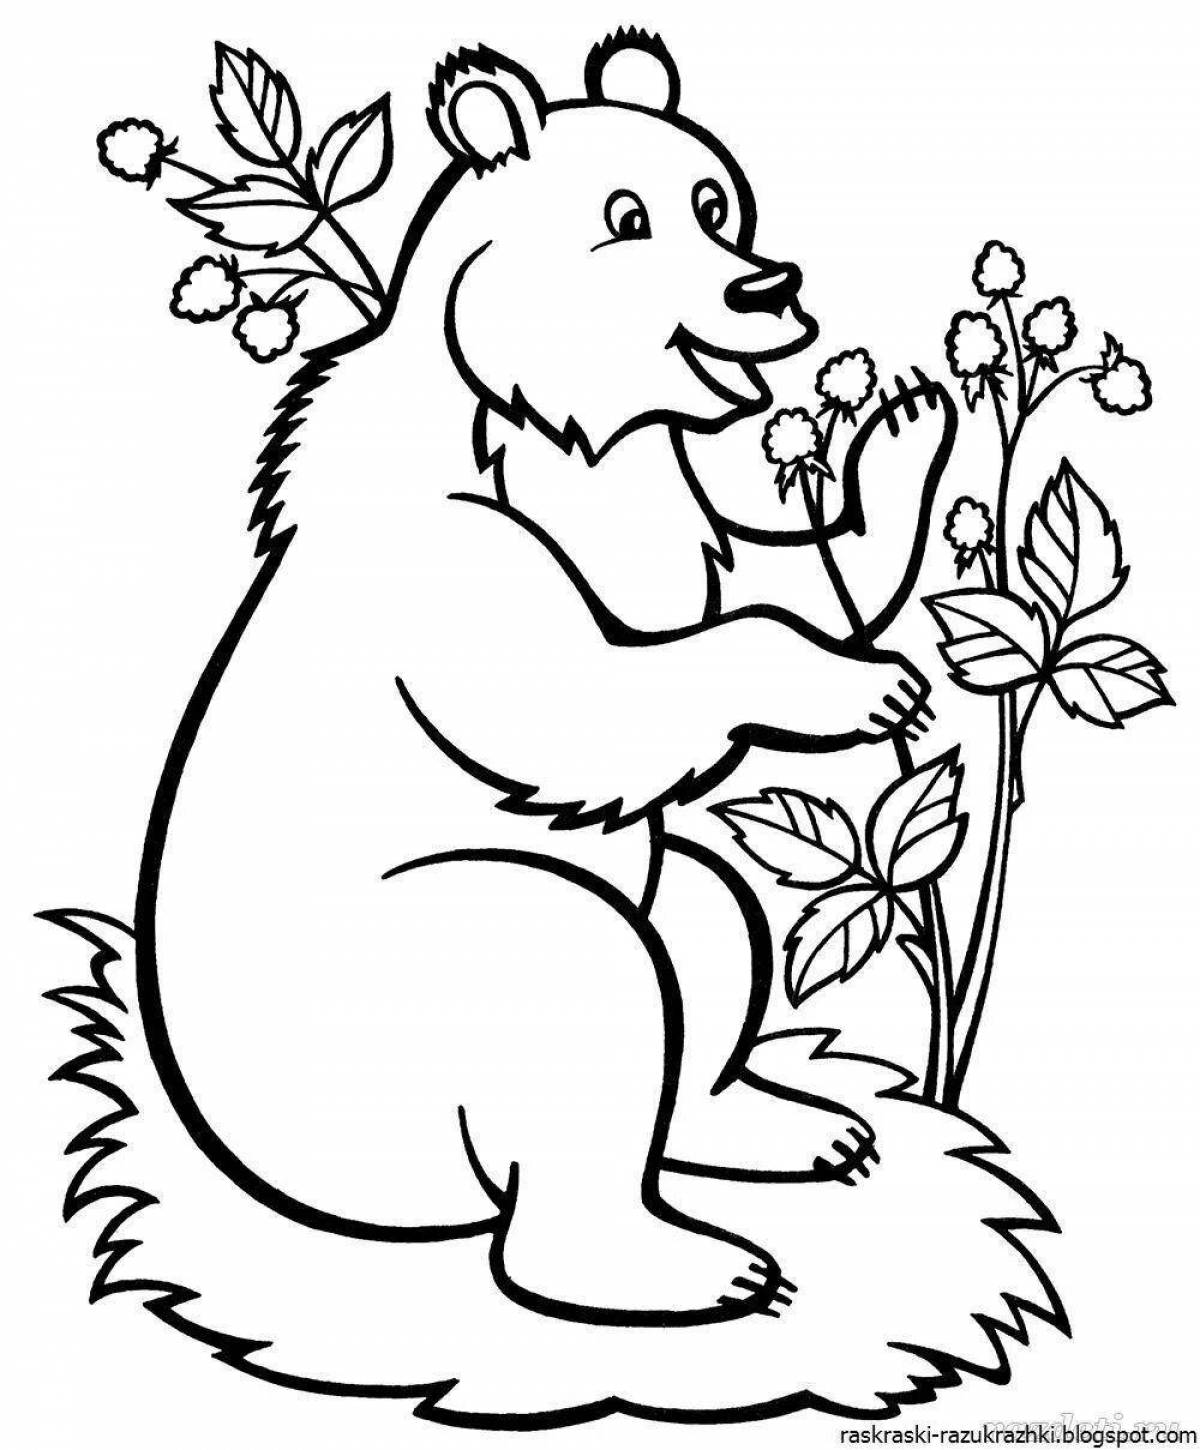 Cute coloring bear for kids